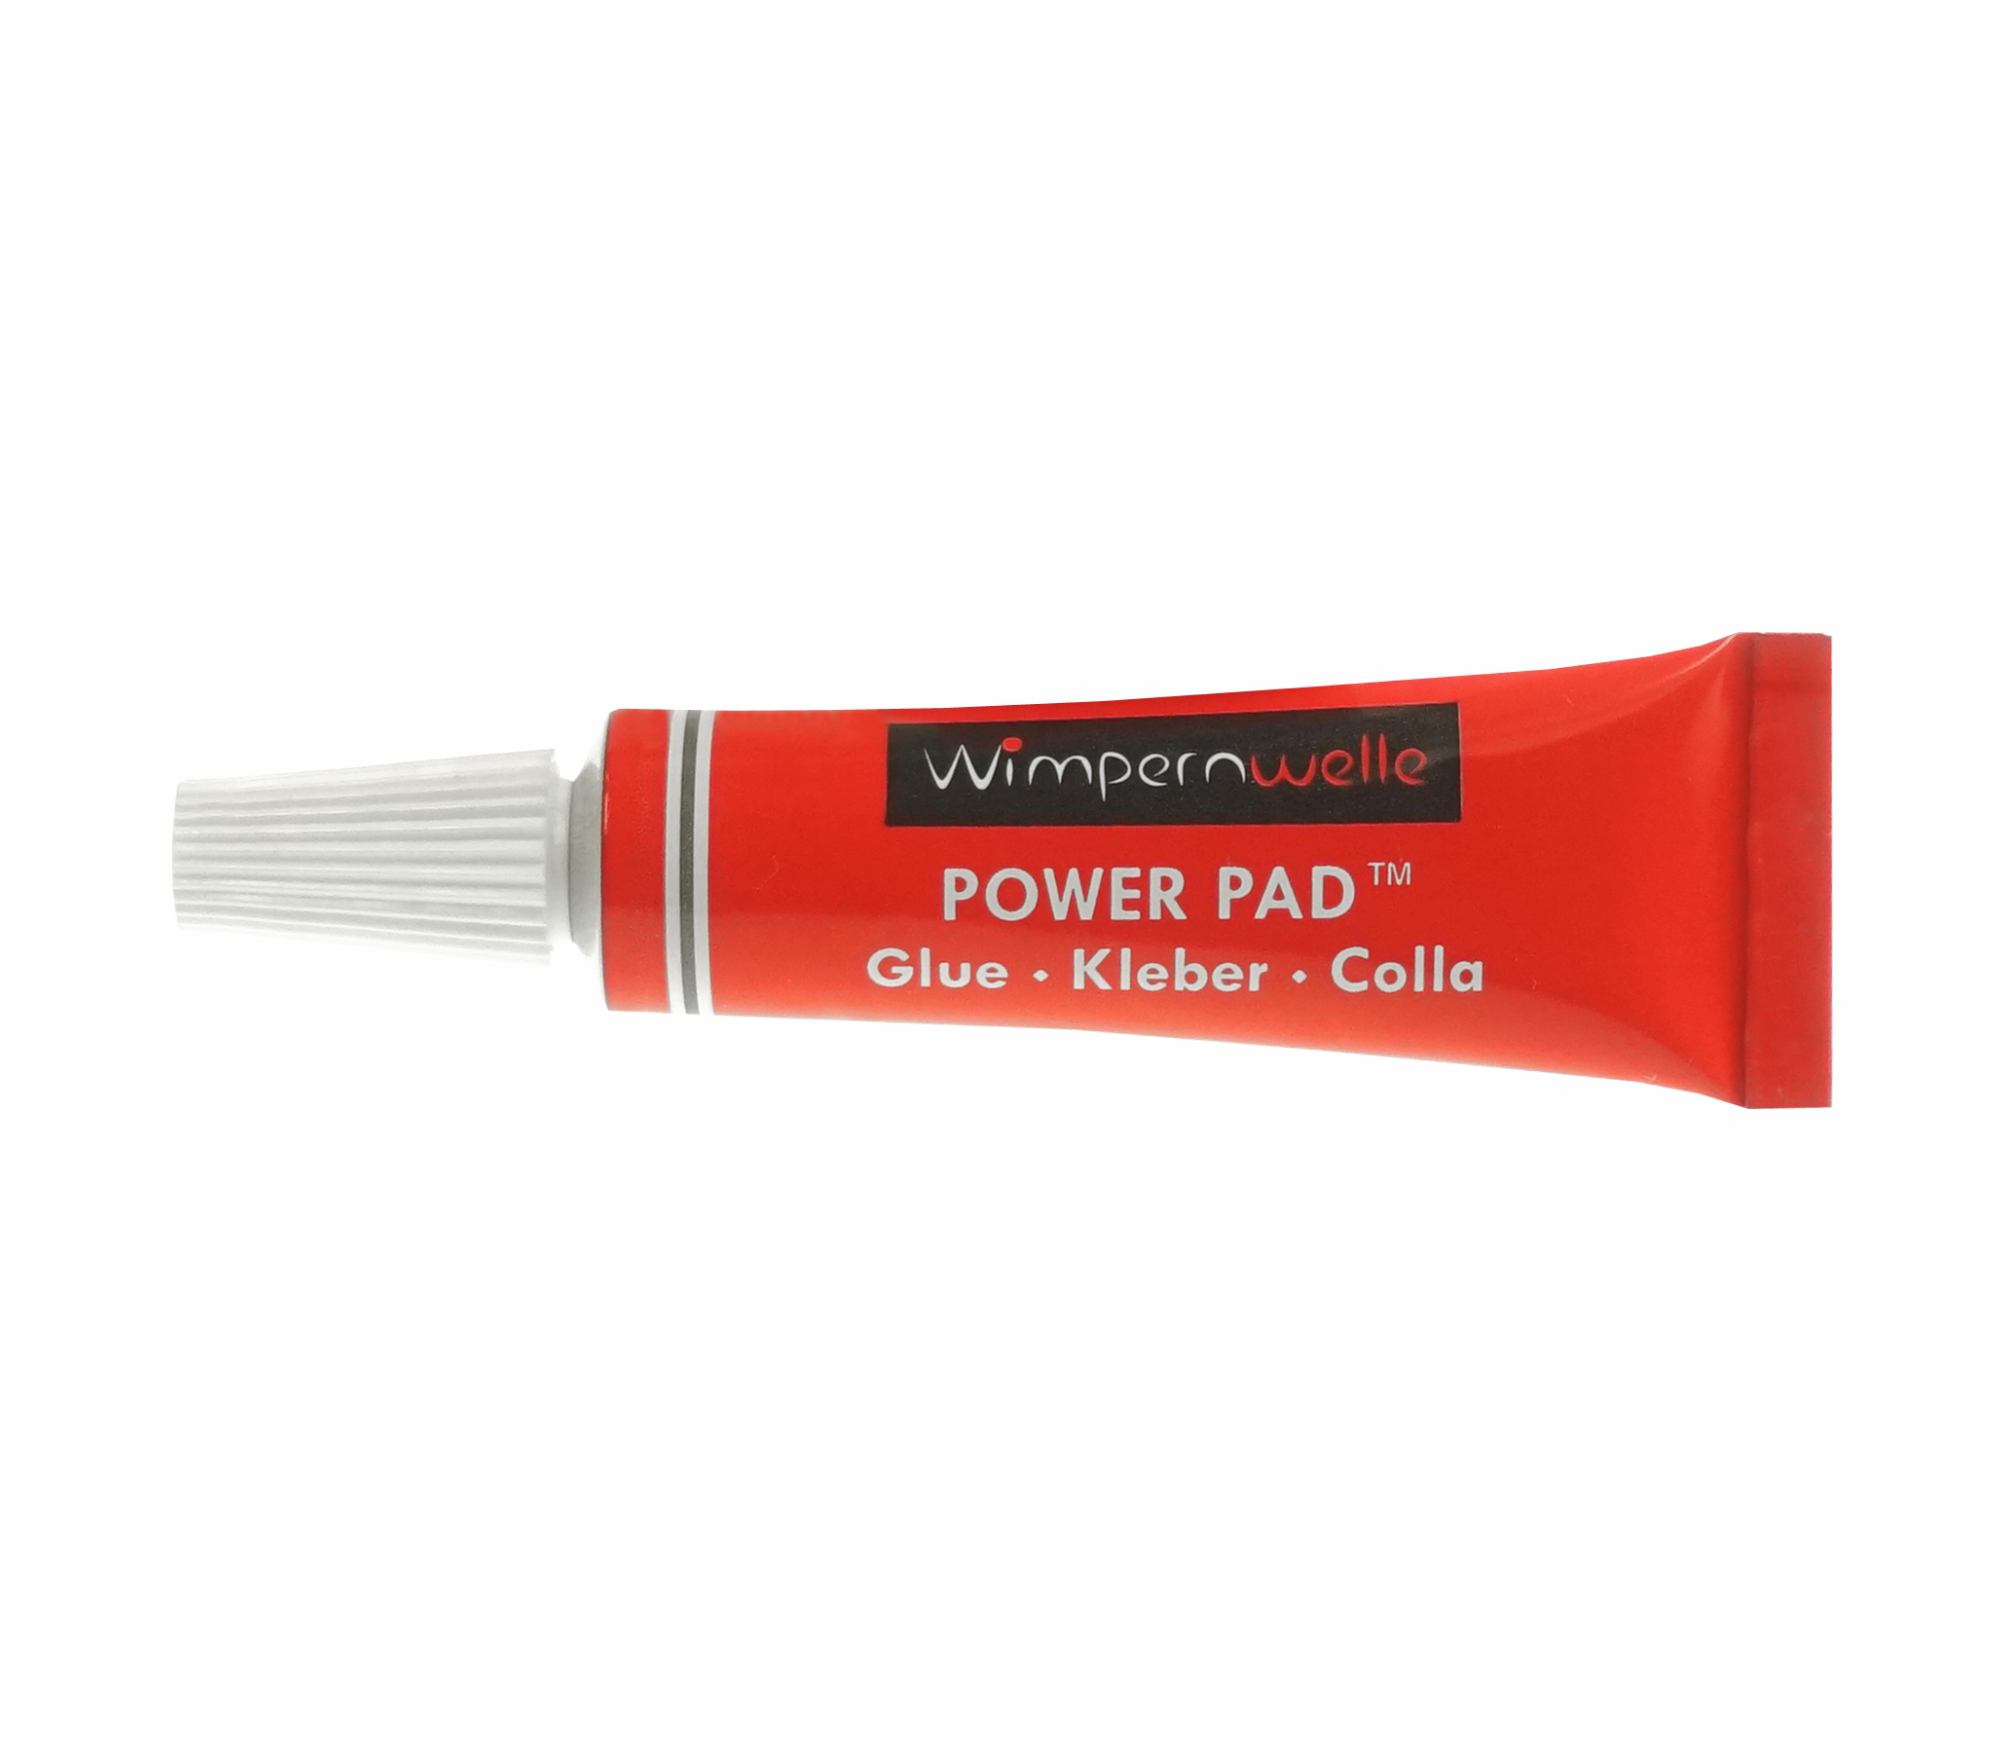 POWER PAD Glue - 2nd generation